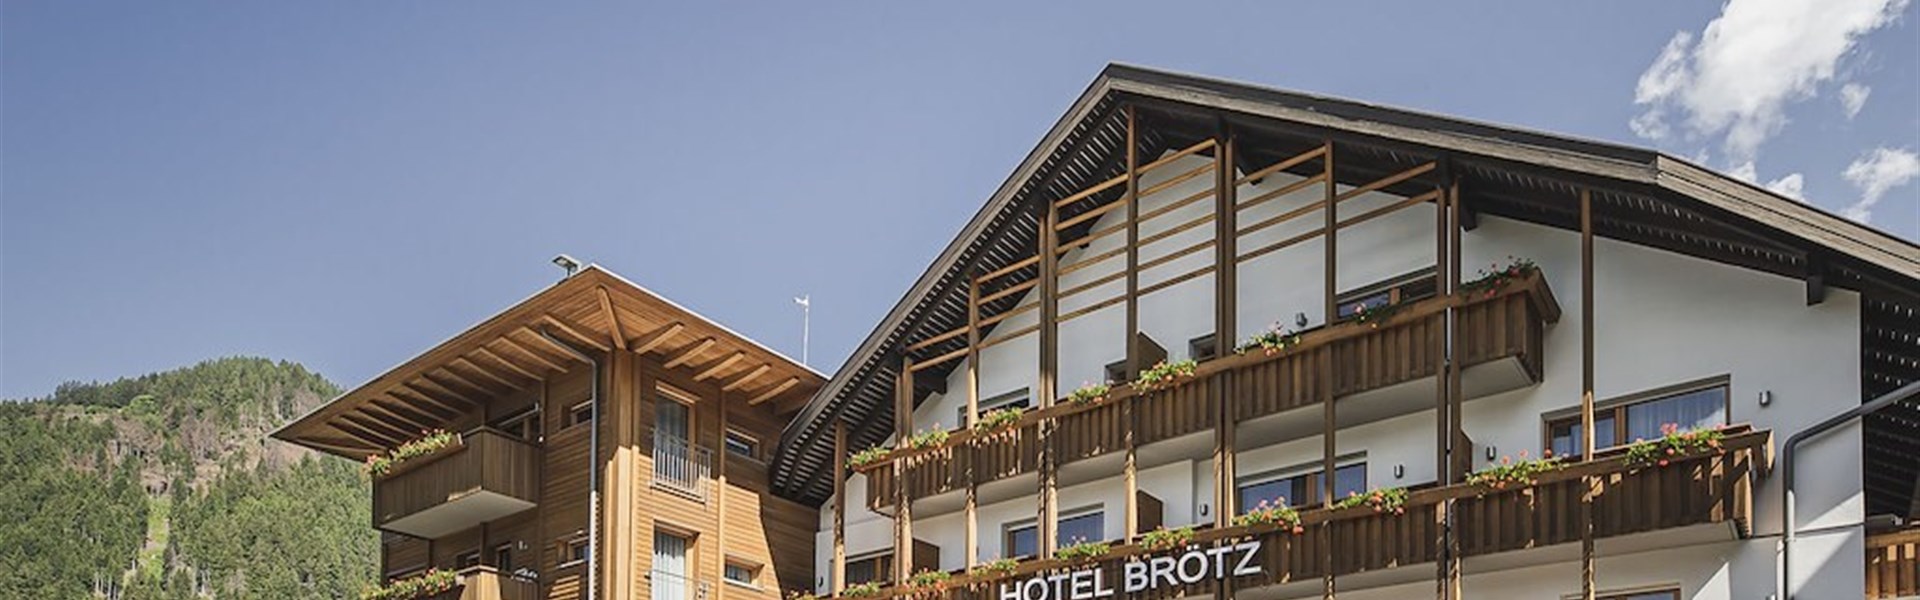 Marco Polo - Hotel Brötz - 